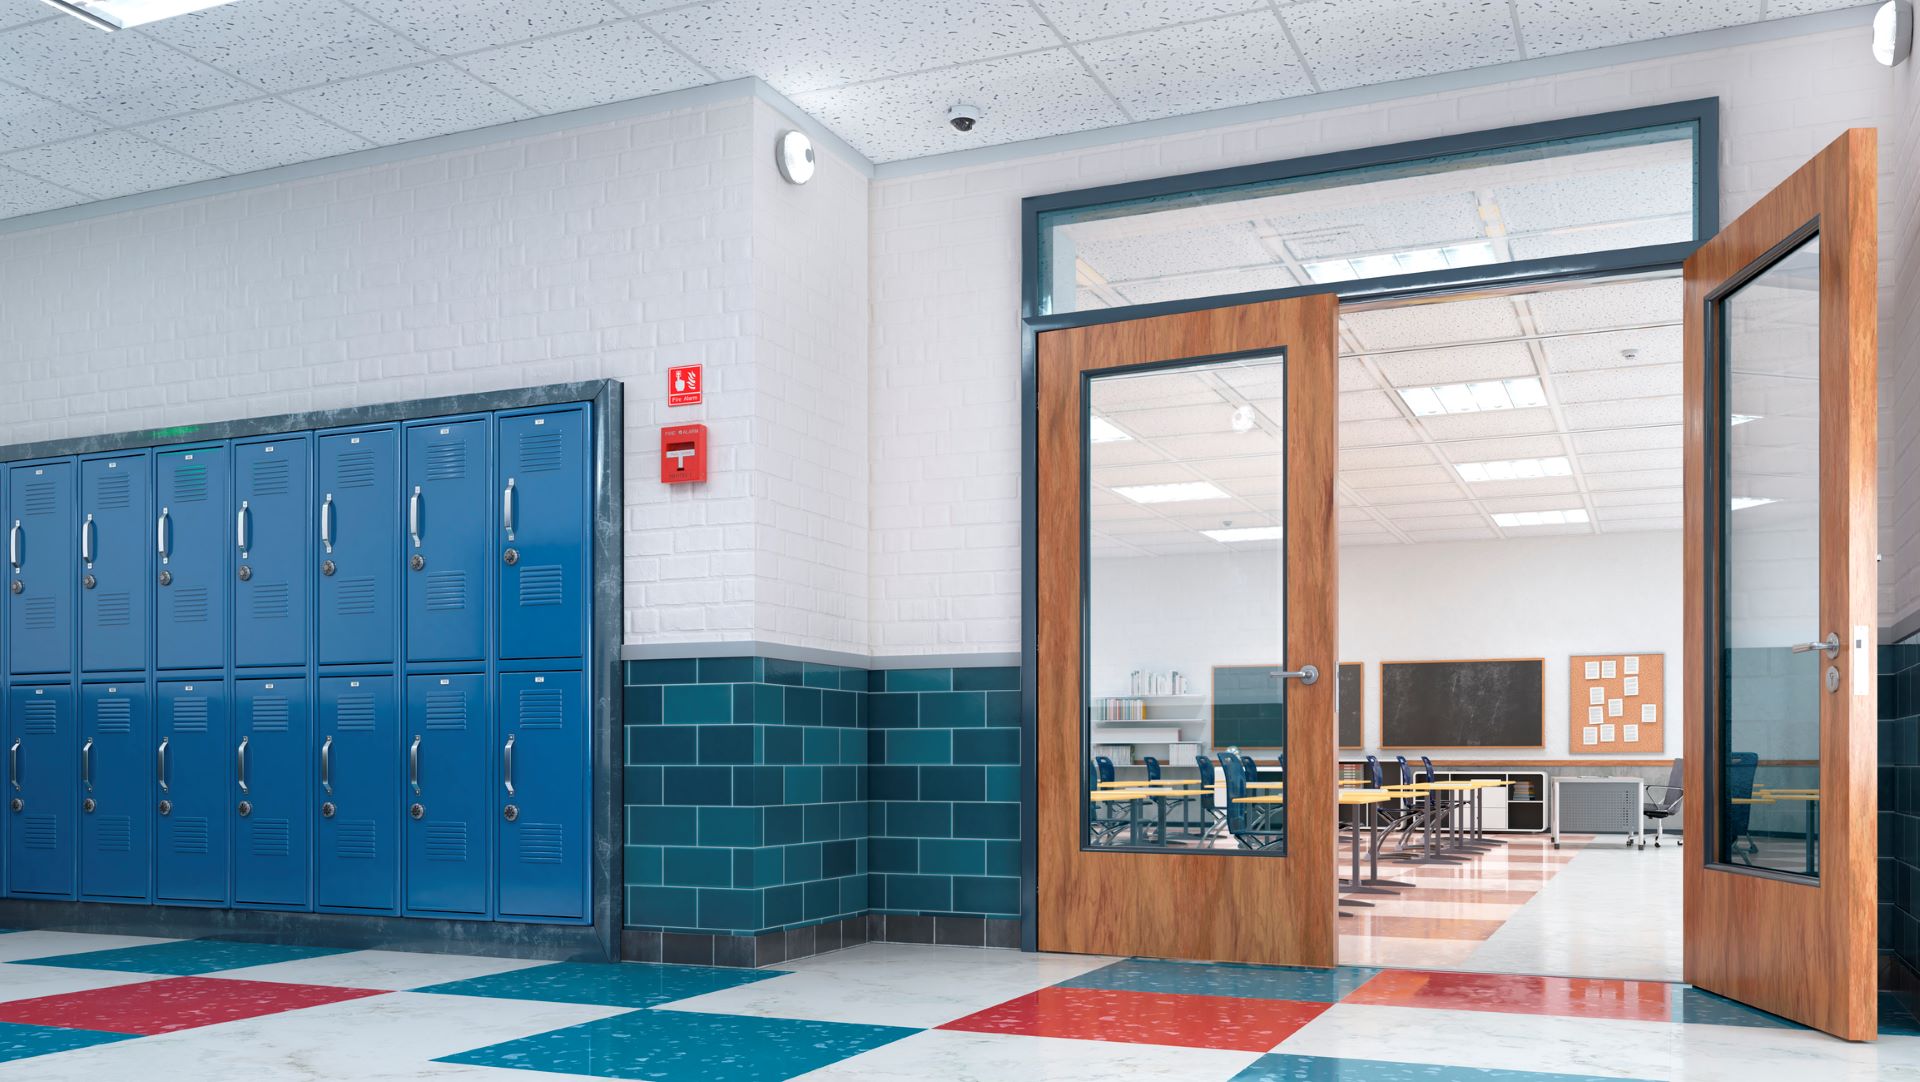 Secure Classroom Doors to Stop Active Shooters